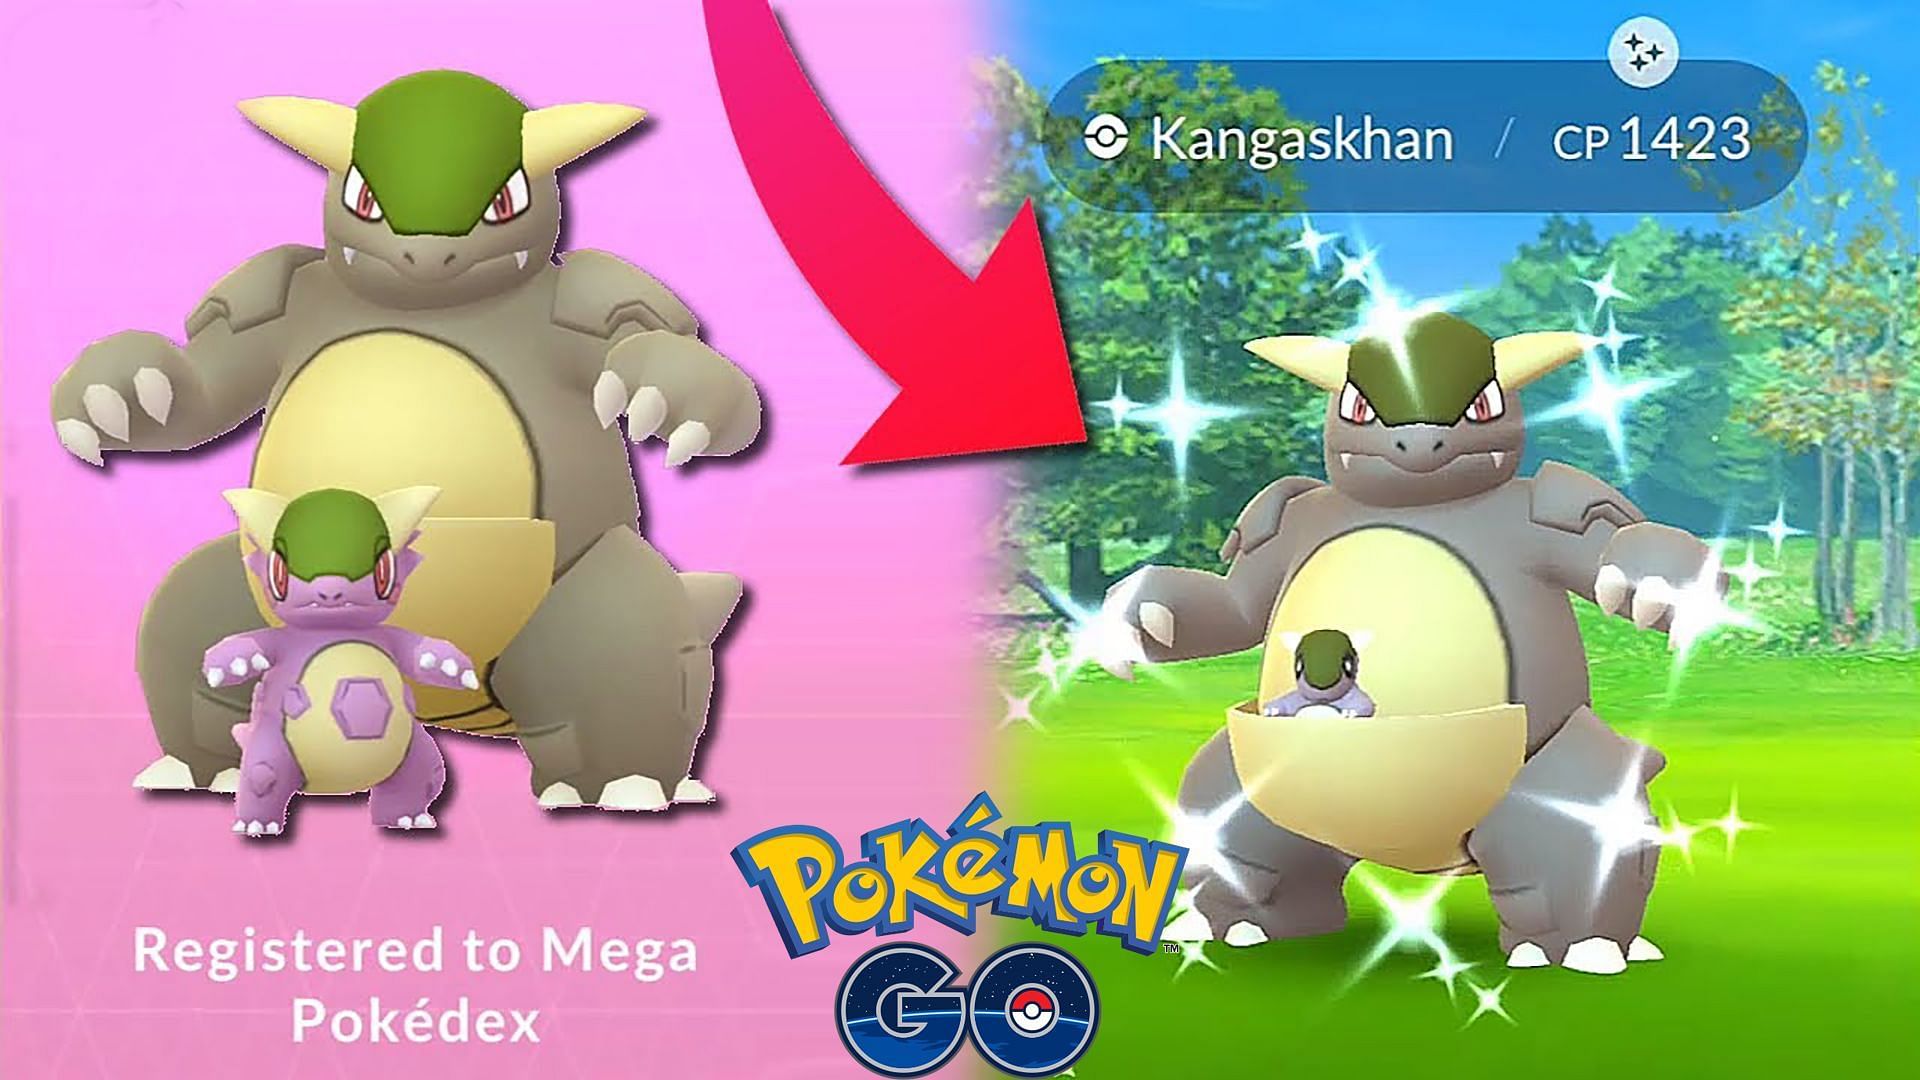 Mega Kangaskhan Raid Guide For Pokémon GO: Adventures Abound